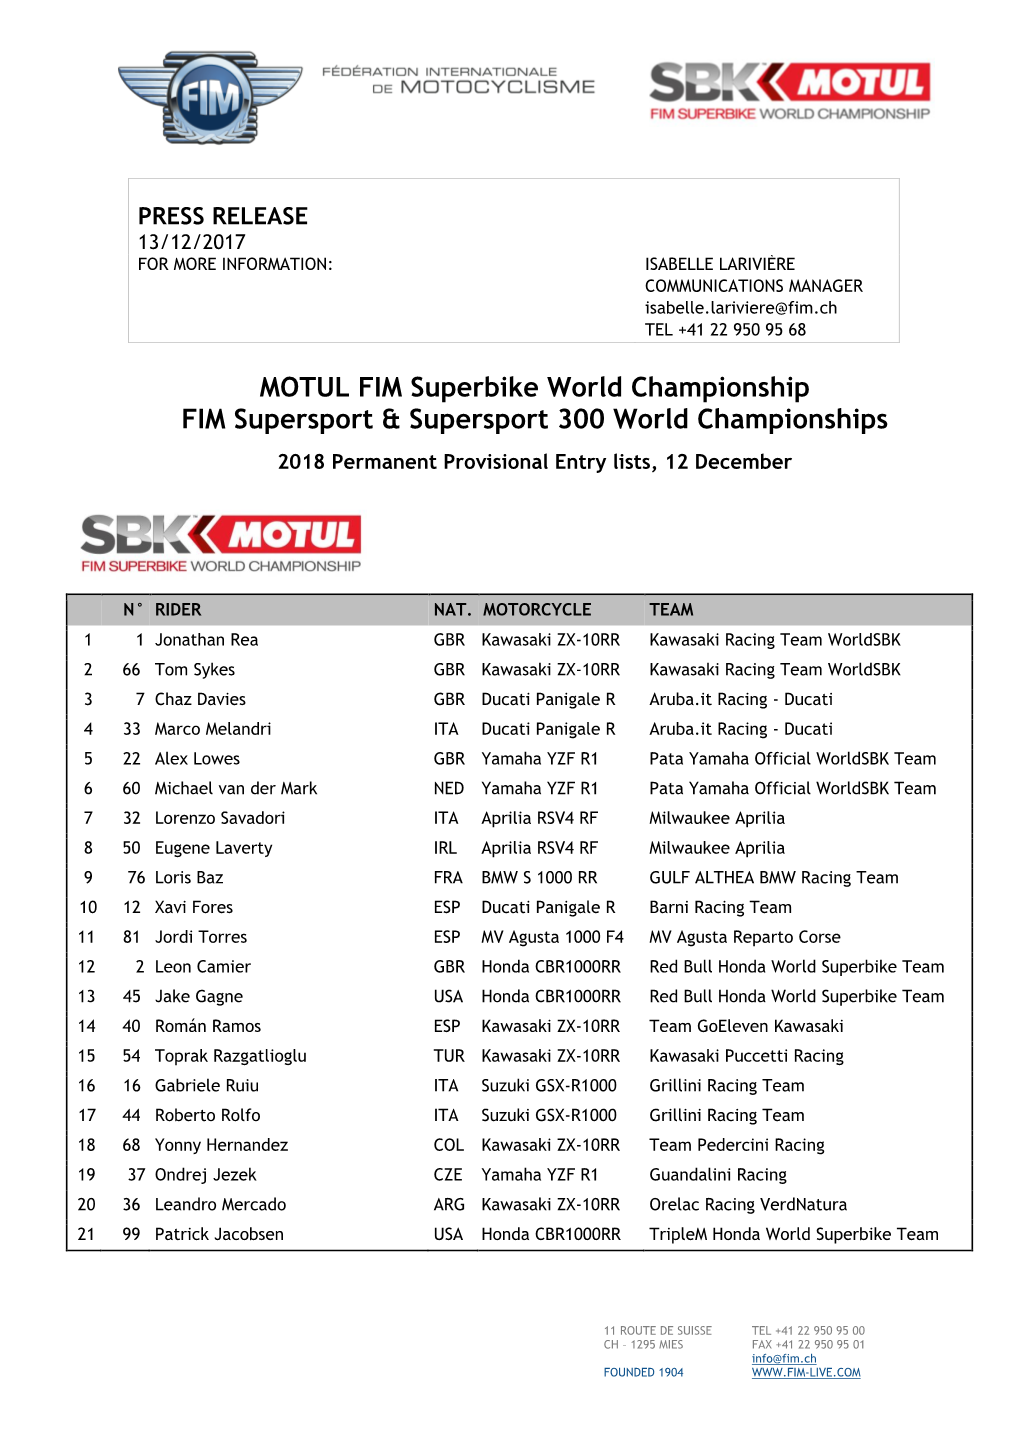 MOTUL FIM Superbike World Championship FIM Supersport & Supersport 300 World Championships 2018 Permanent Provisional Entry Lists, 12 December